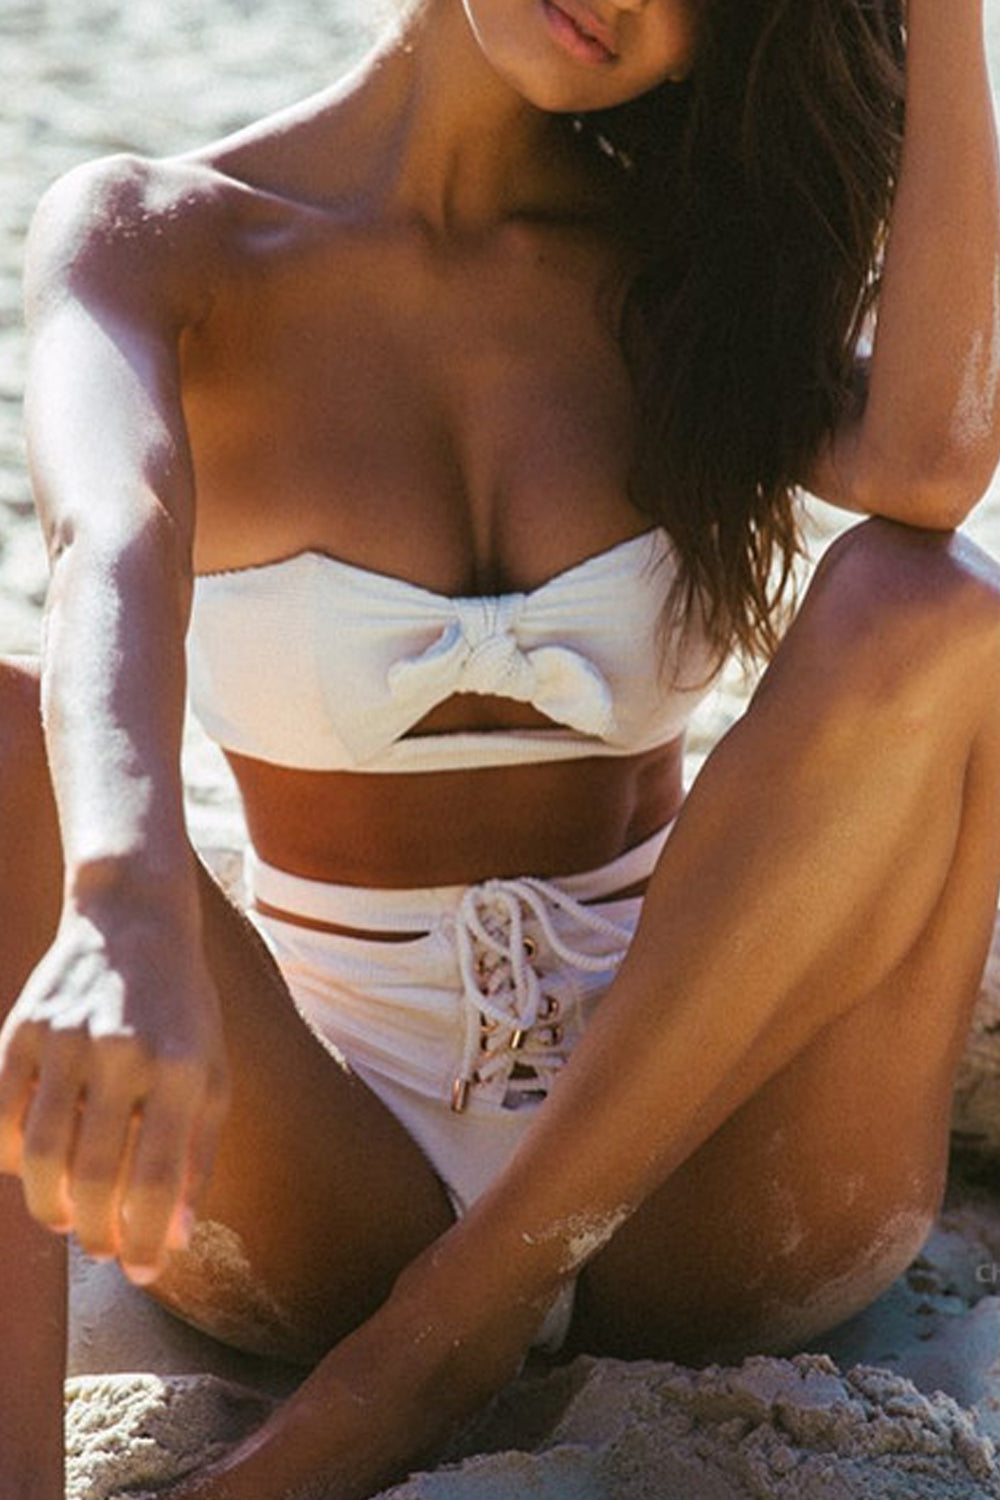 Iyasson White Strapless Bikini Set